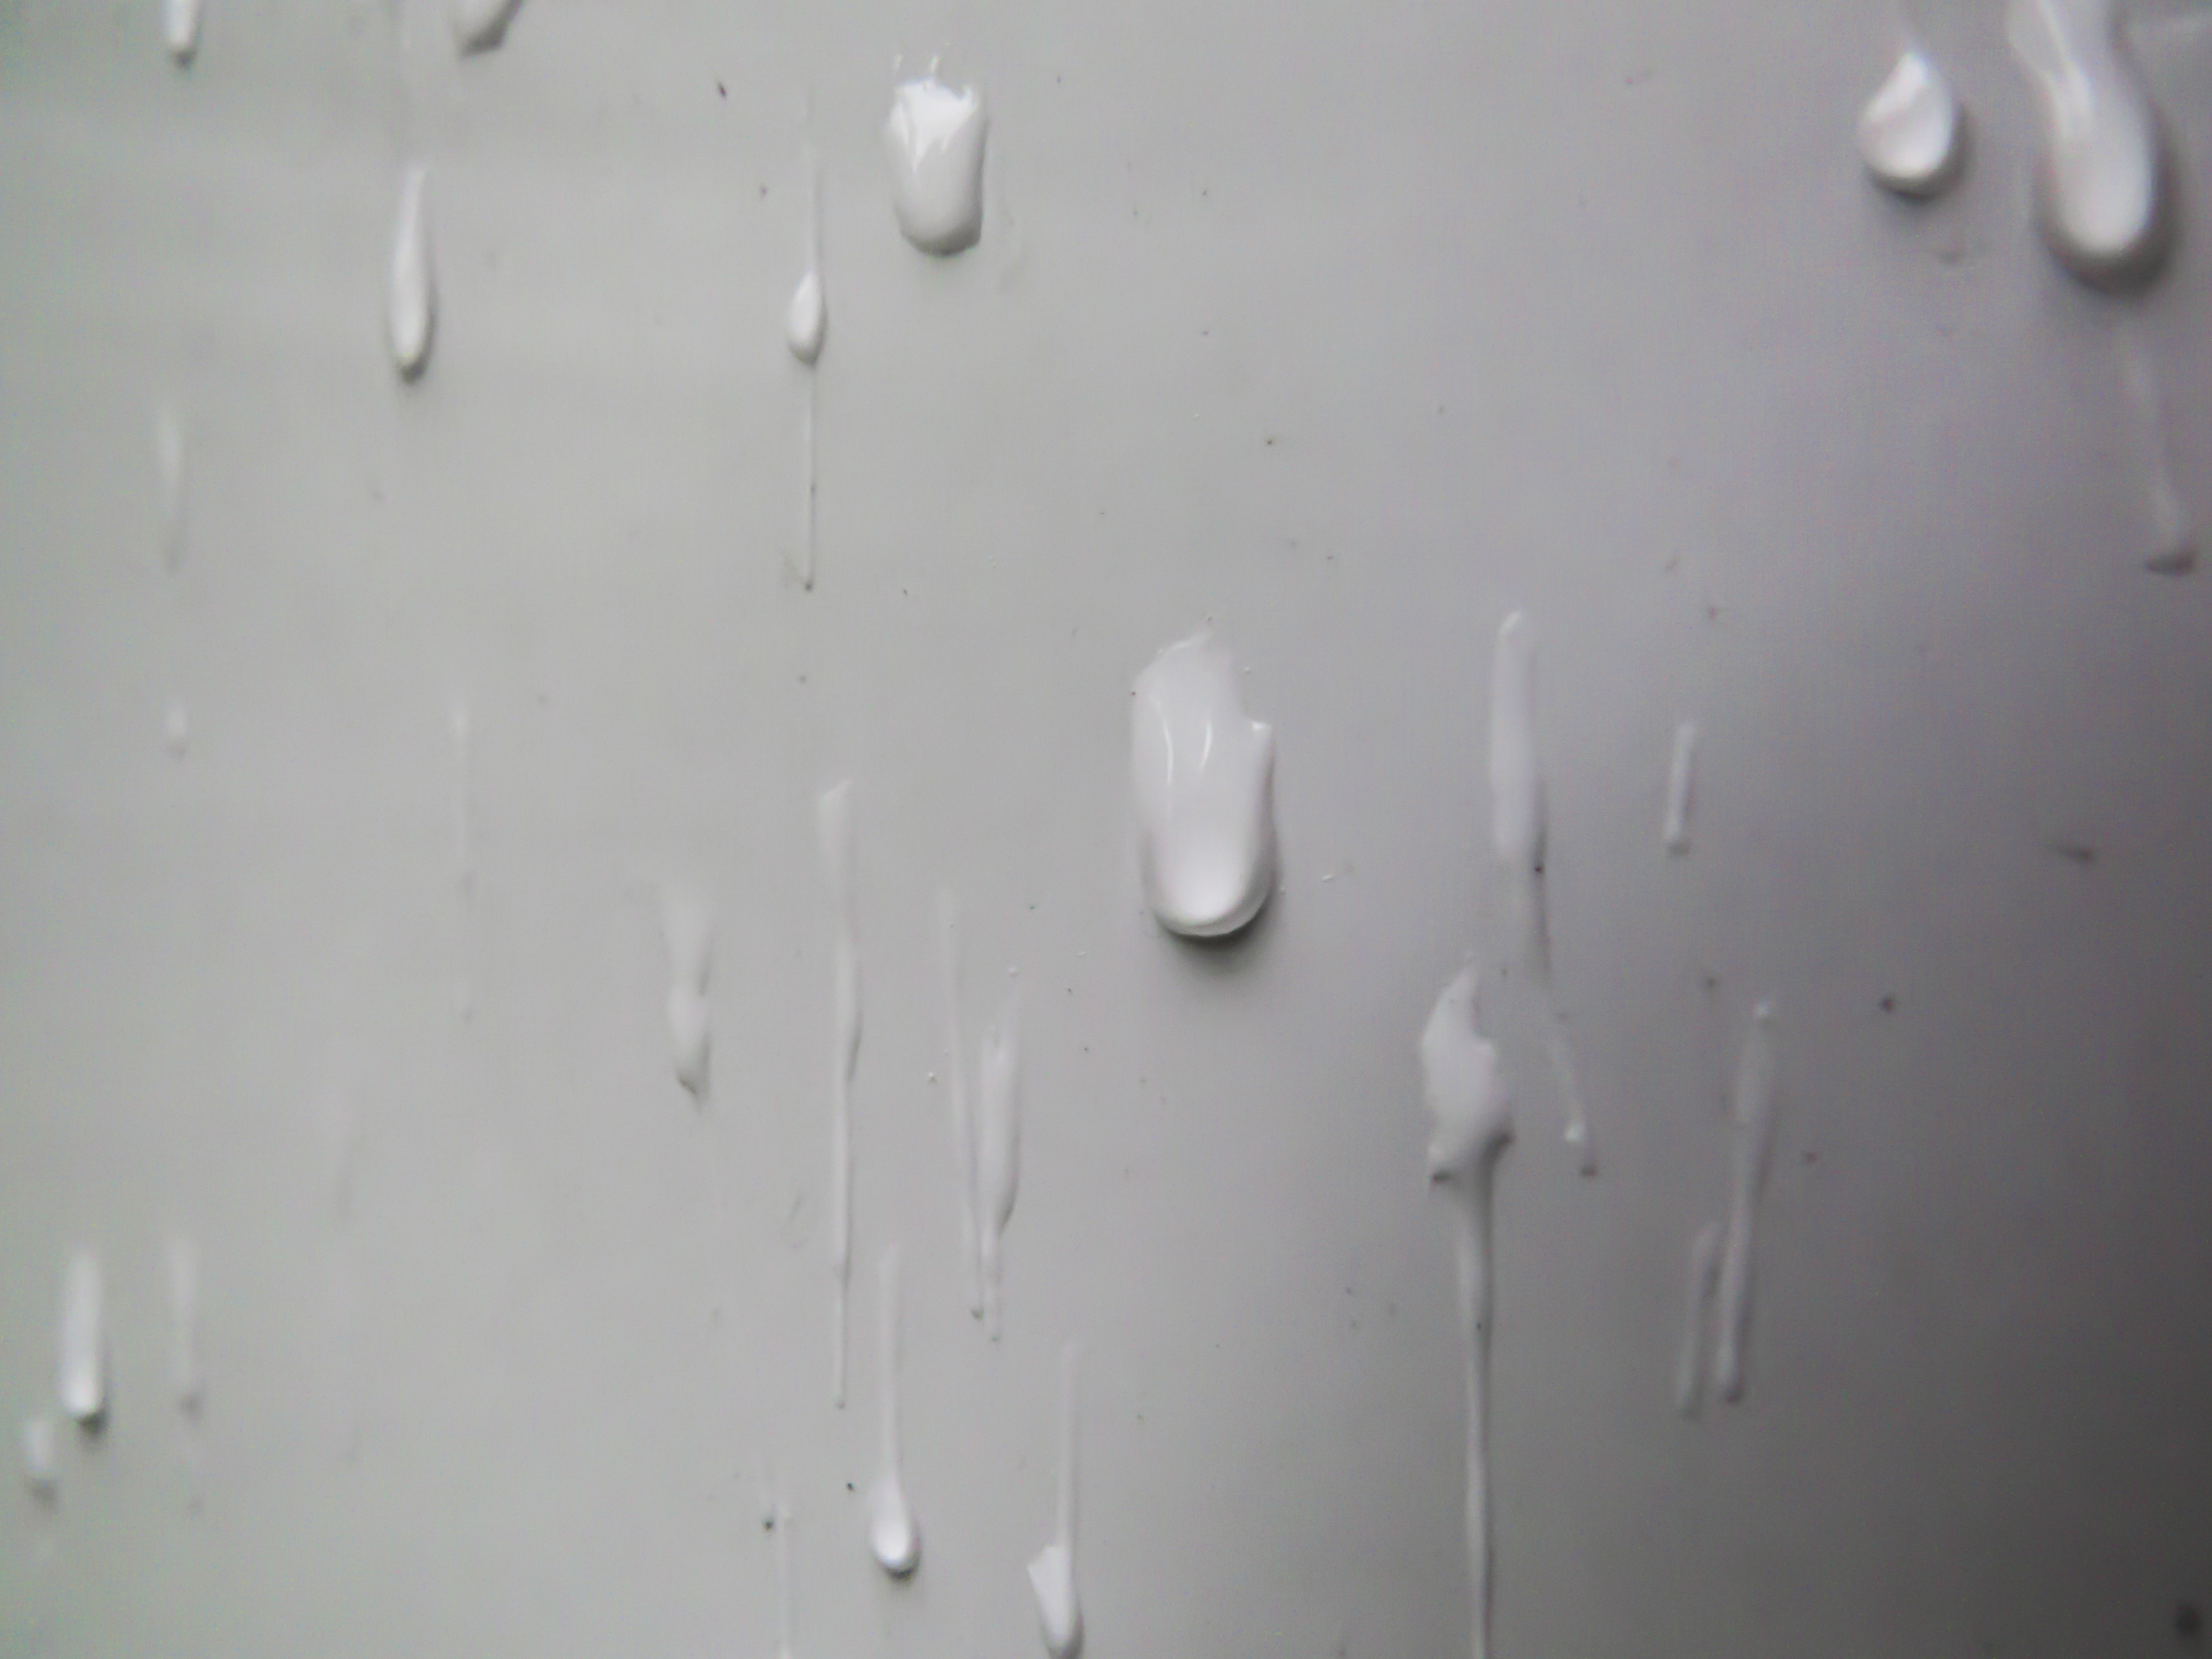 Water droplets on plastic doors, Doors, Drop, Droplet, Rain, HQ Photo